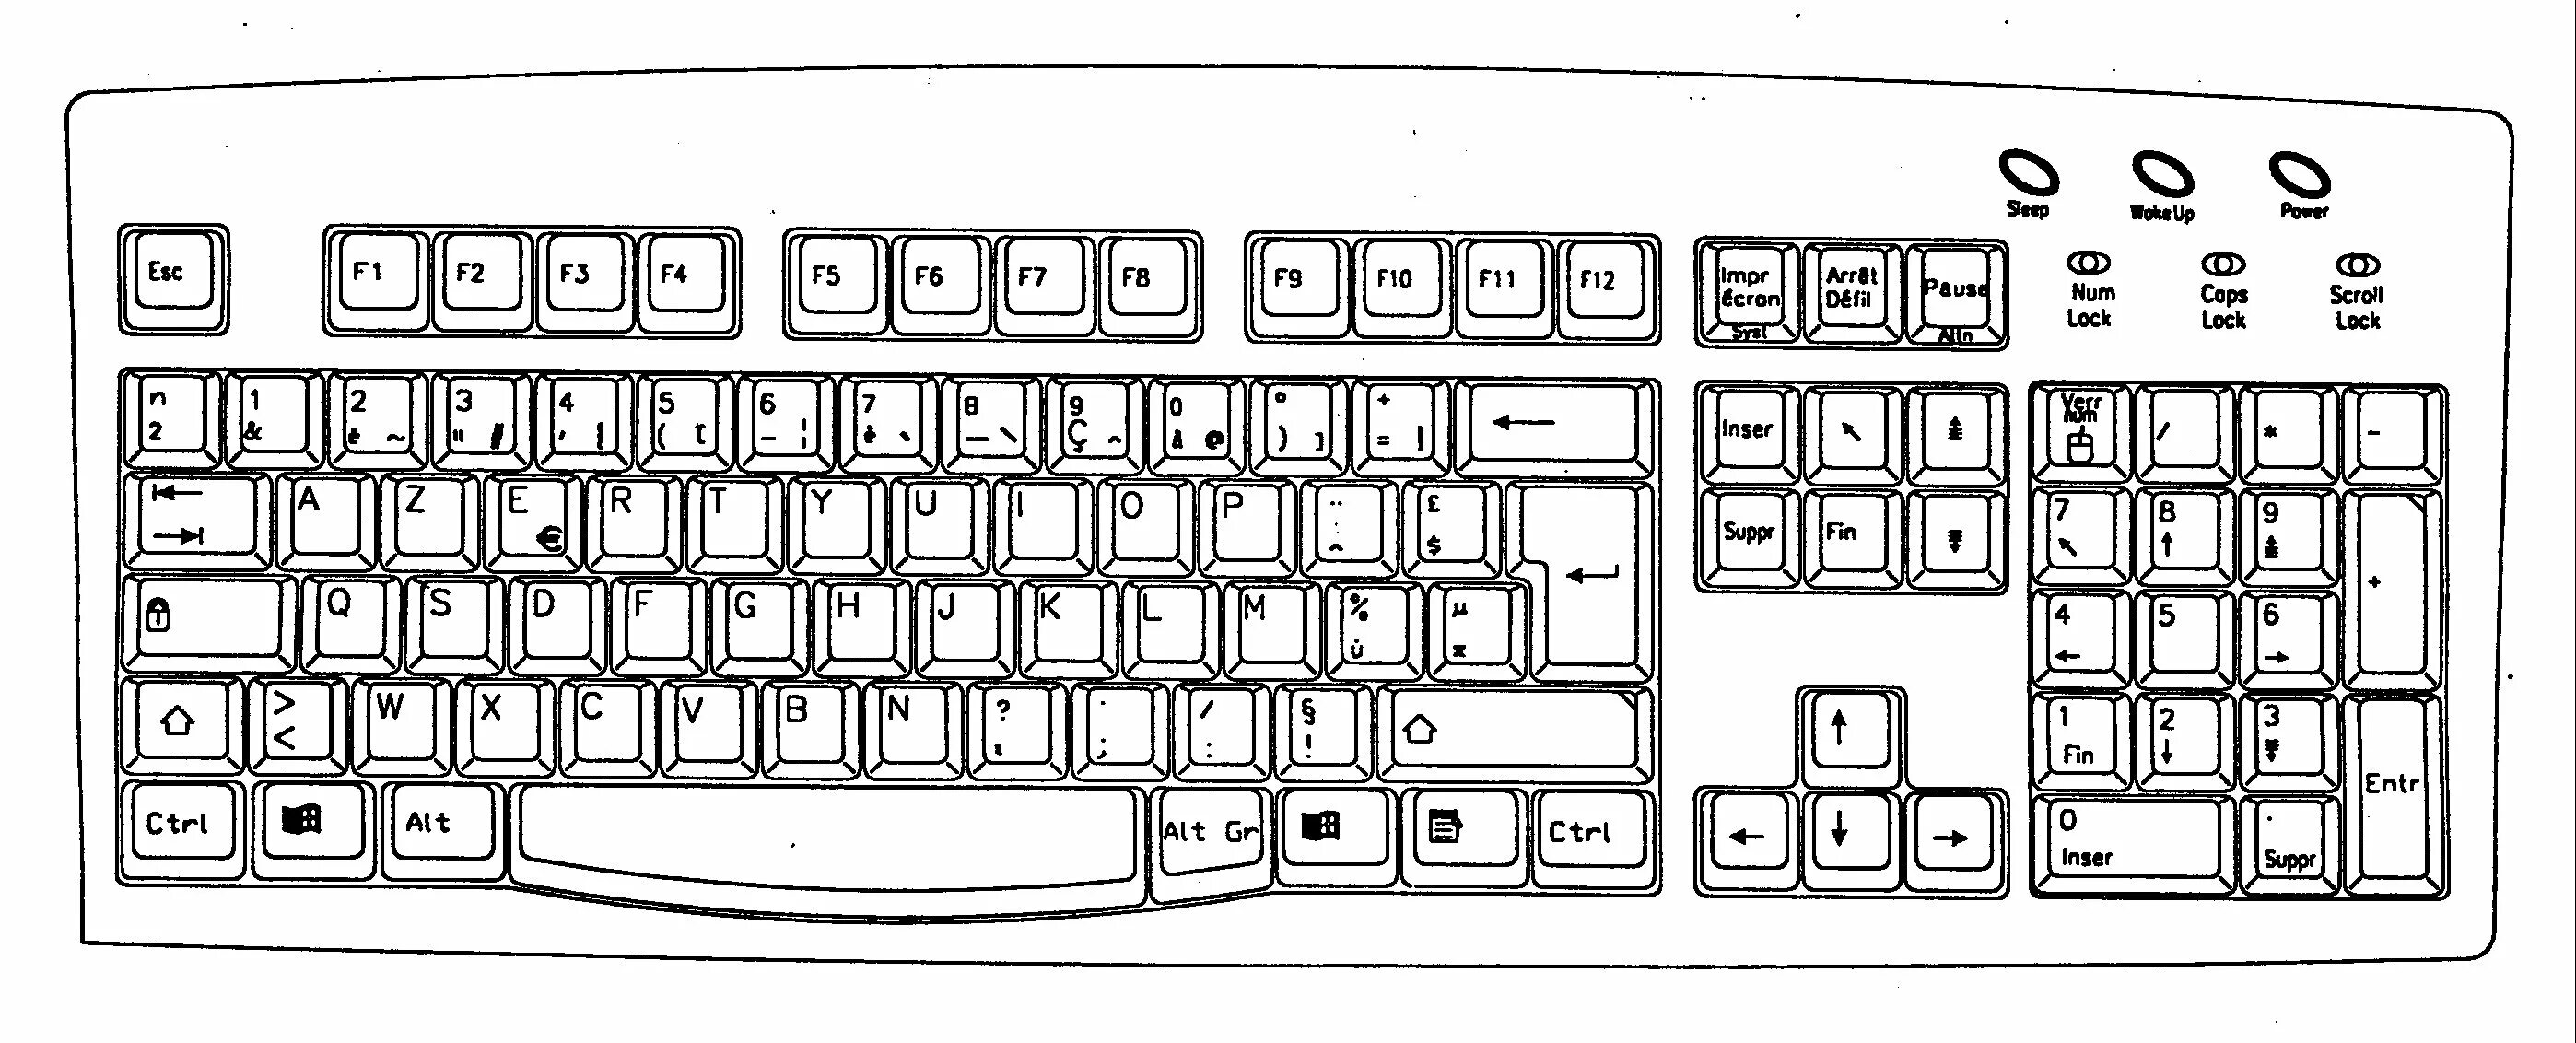 Amazing keyboard layout coloring page